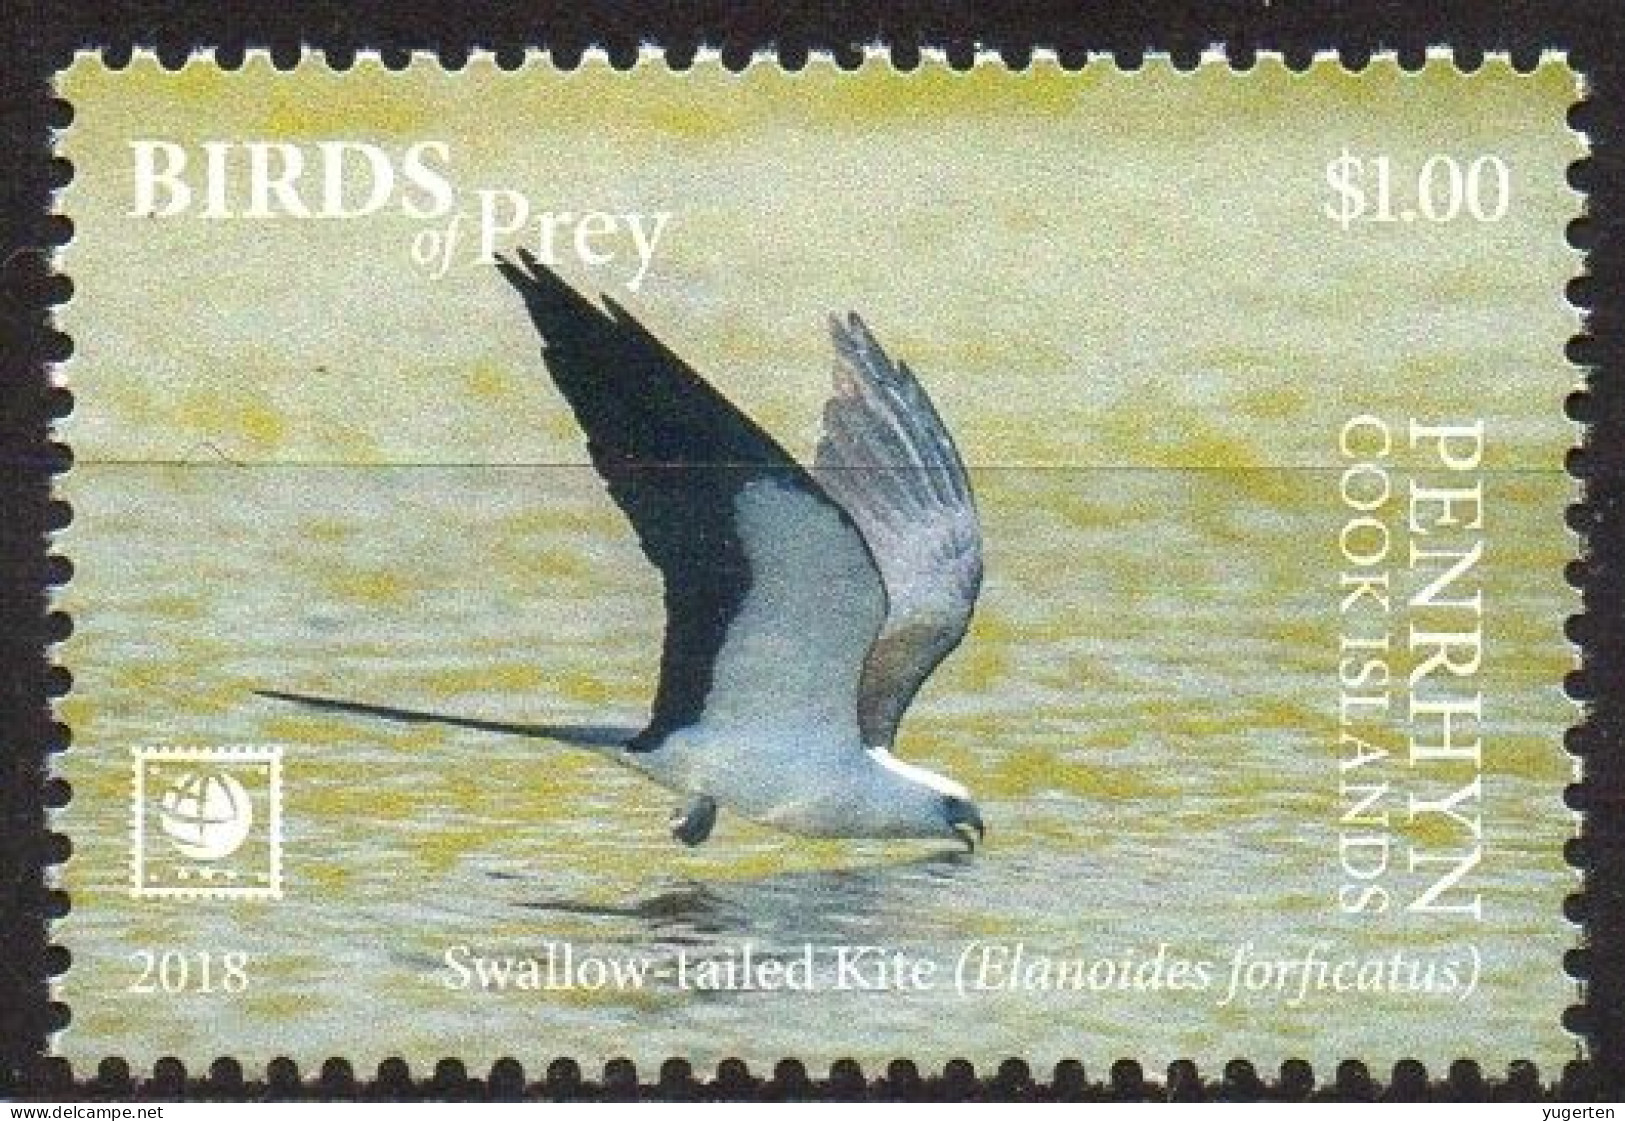 PENRHYN - 1v - MNH -  Swallow-tailed Kite - Eagle Eagles Aquila Aigle Aigles Adler - Birds - Vögel - Aguilas Aquile - Aigles & Rapaces Diurnes